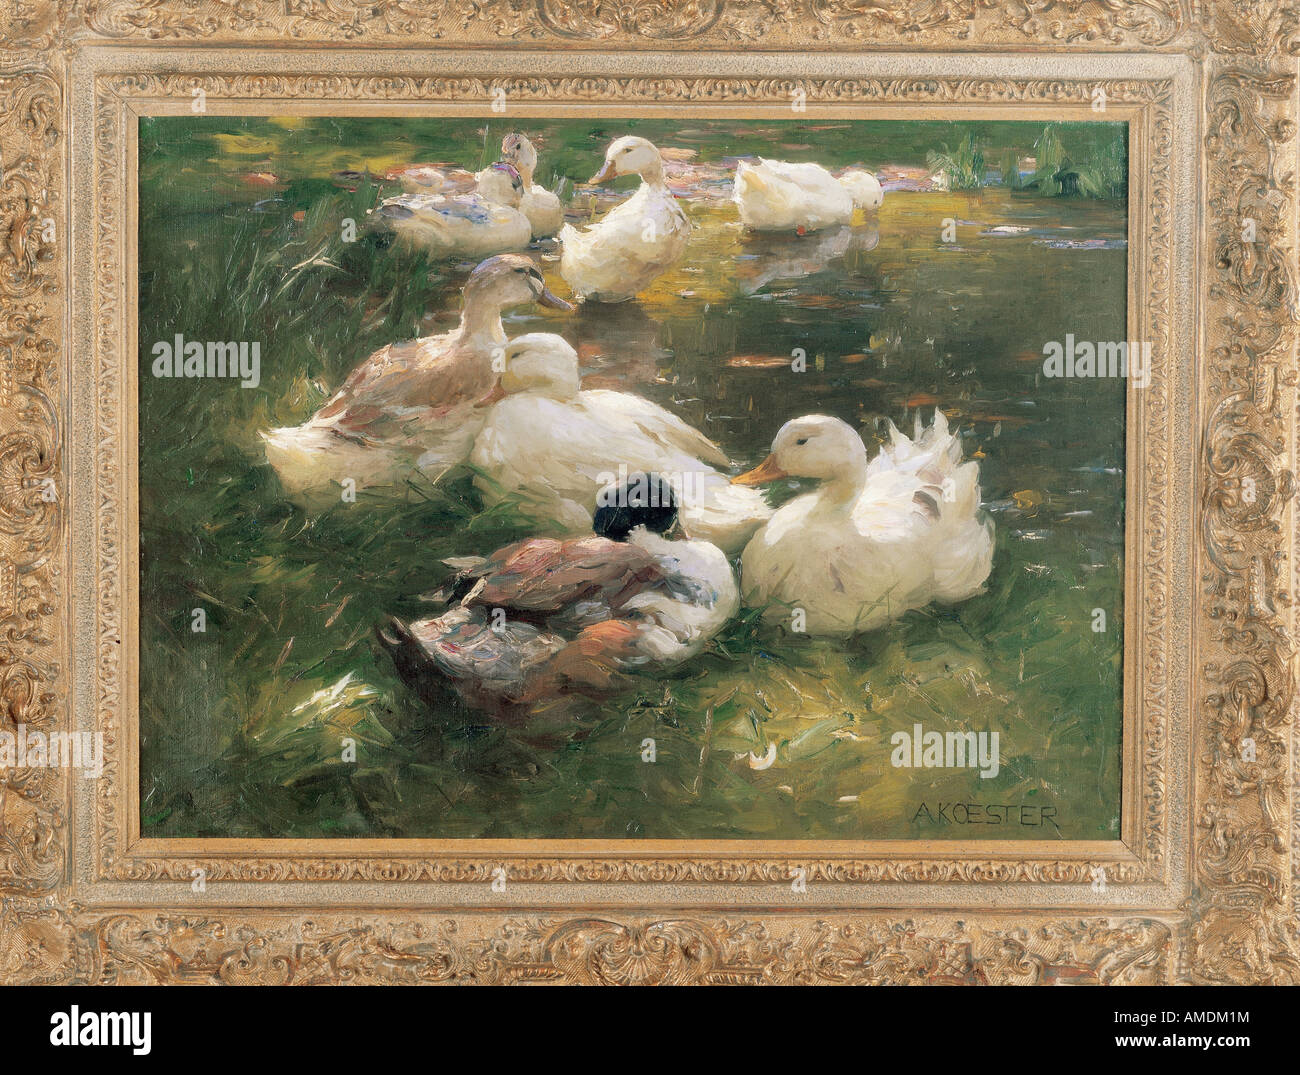 'fine arts, Koester, Alexander, (1864 - 1932), painting, 'ducks', historic, historical, Europe, Germany, 19th / 20th century, Stock Photo